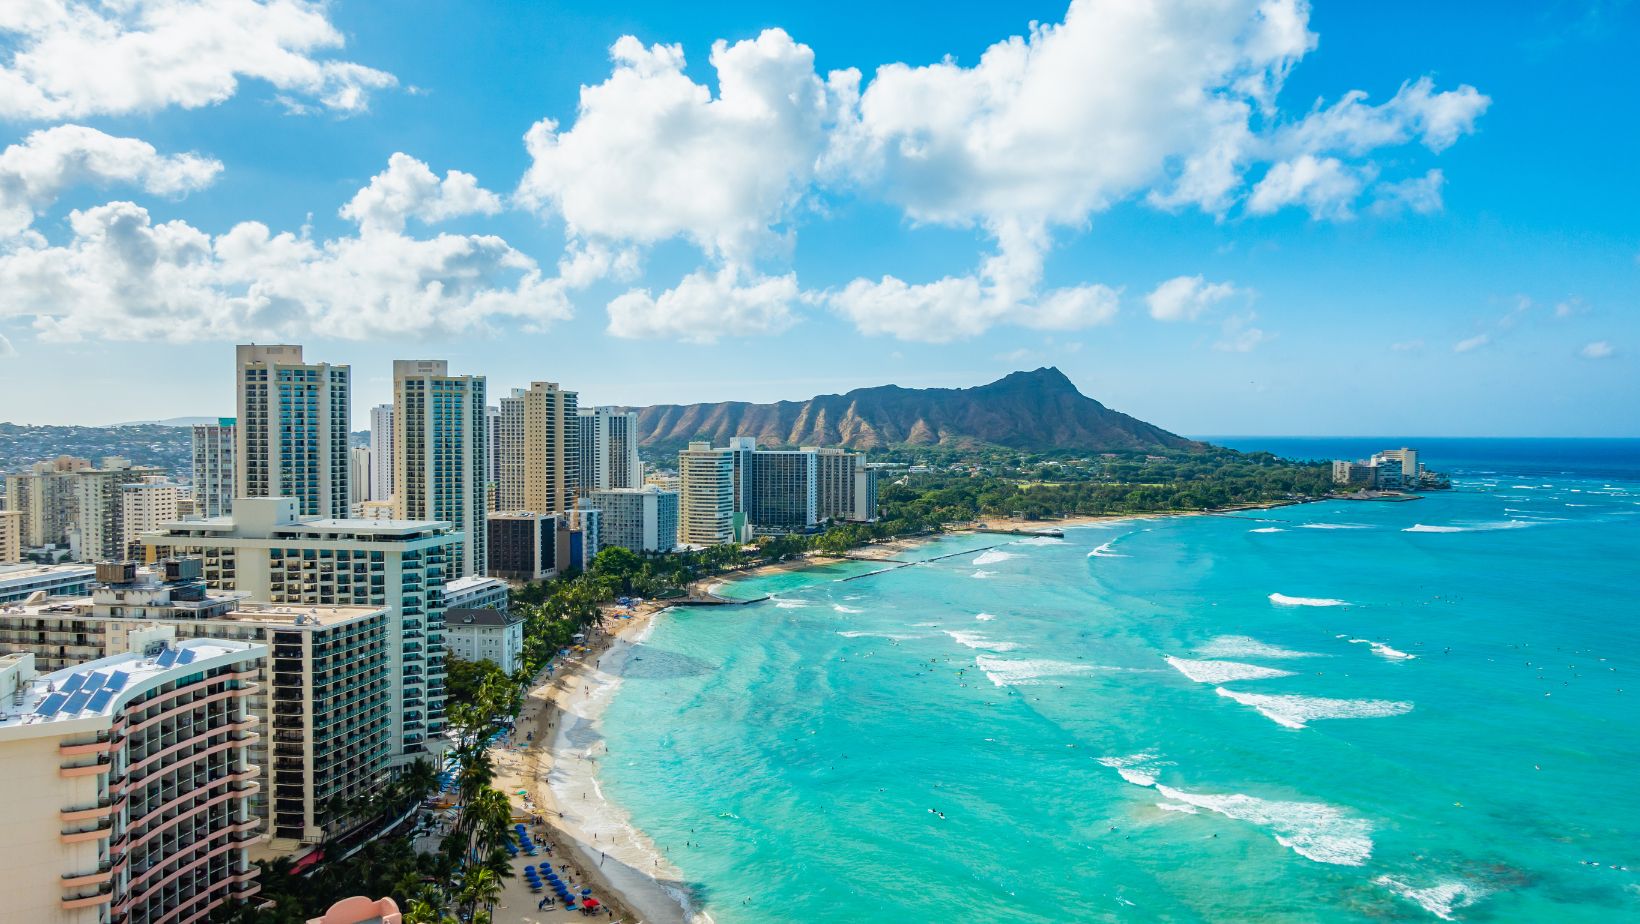 Top Hotel Picks for A Hawaiian Taste of Paradise